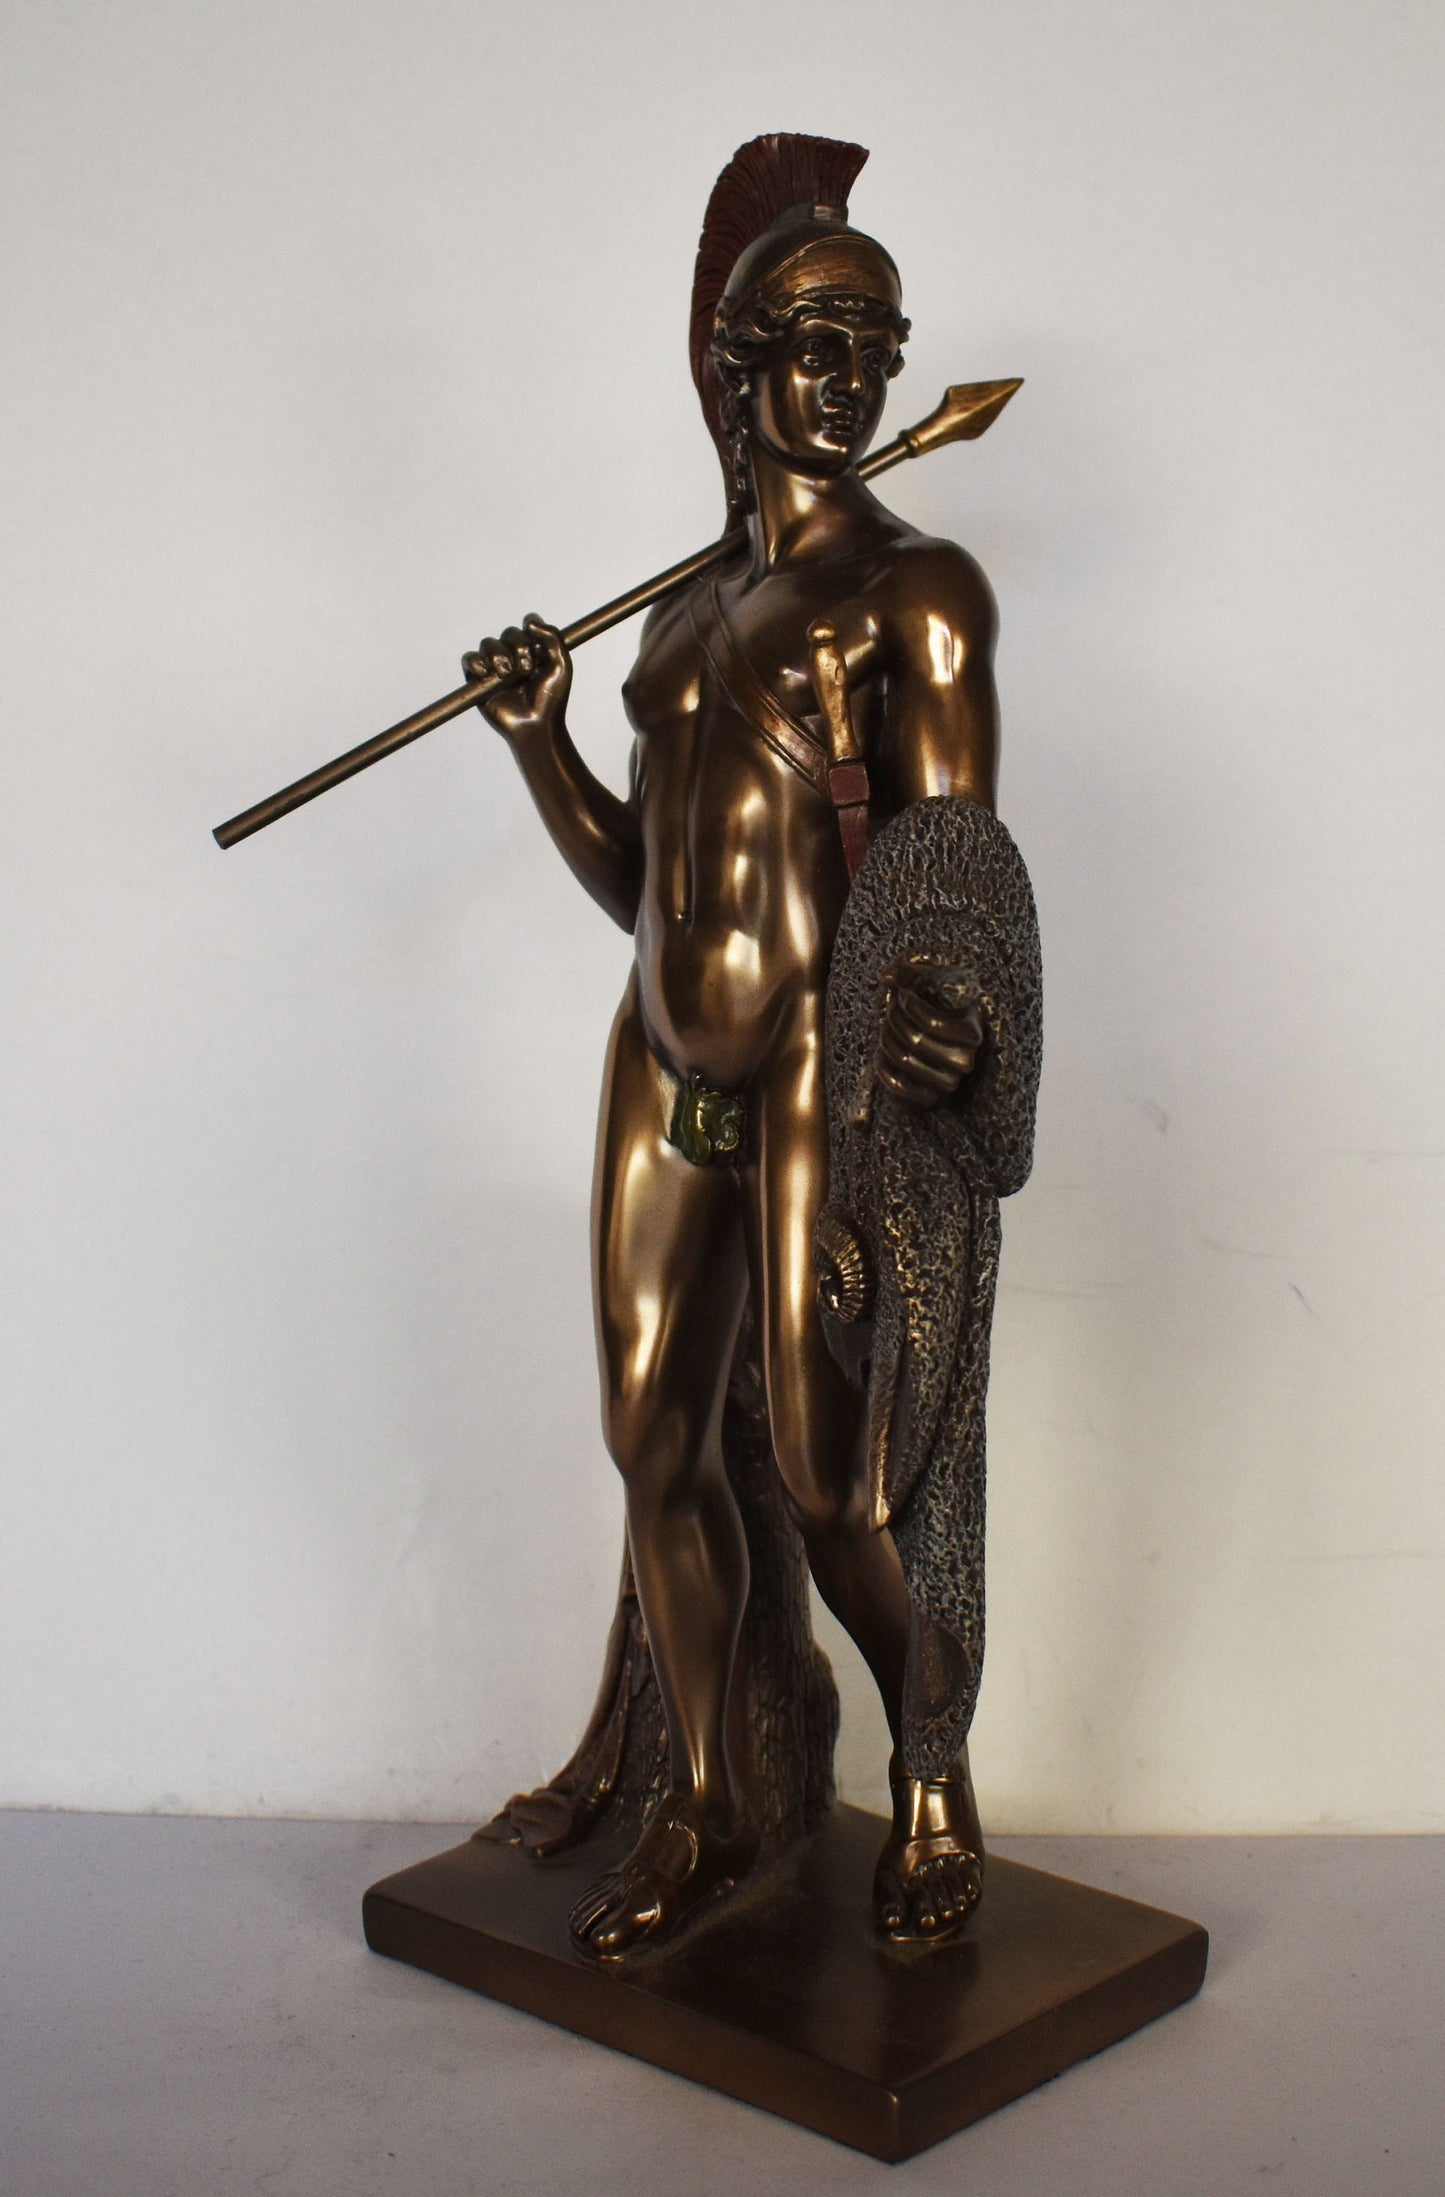 Jason - Ancient Greek Hero - King of Iolcos - Leader of Argonauts - Golden Fleece Myth - Medea's Husband - Cold Cast Bronze Resin